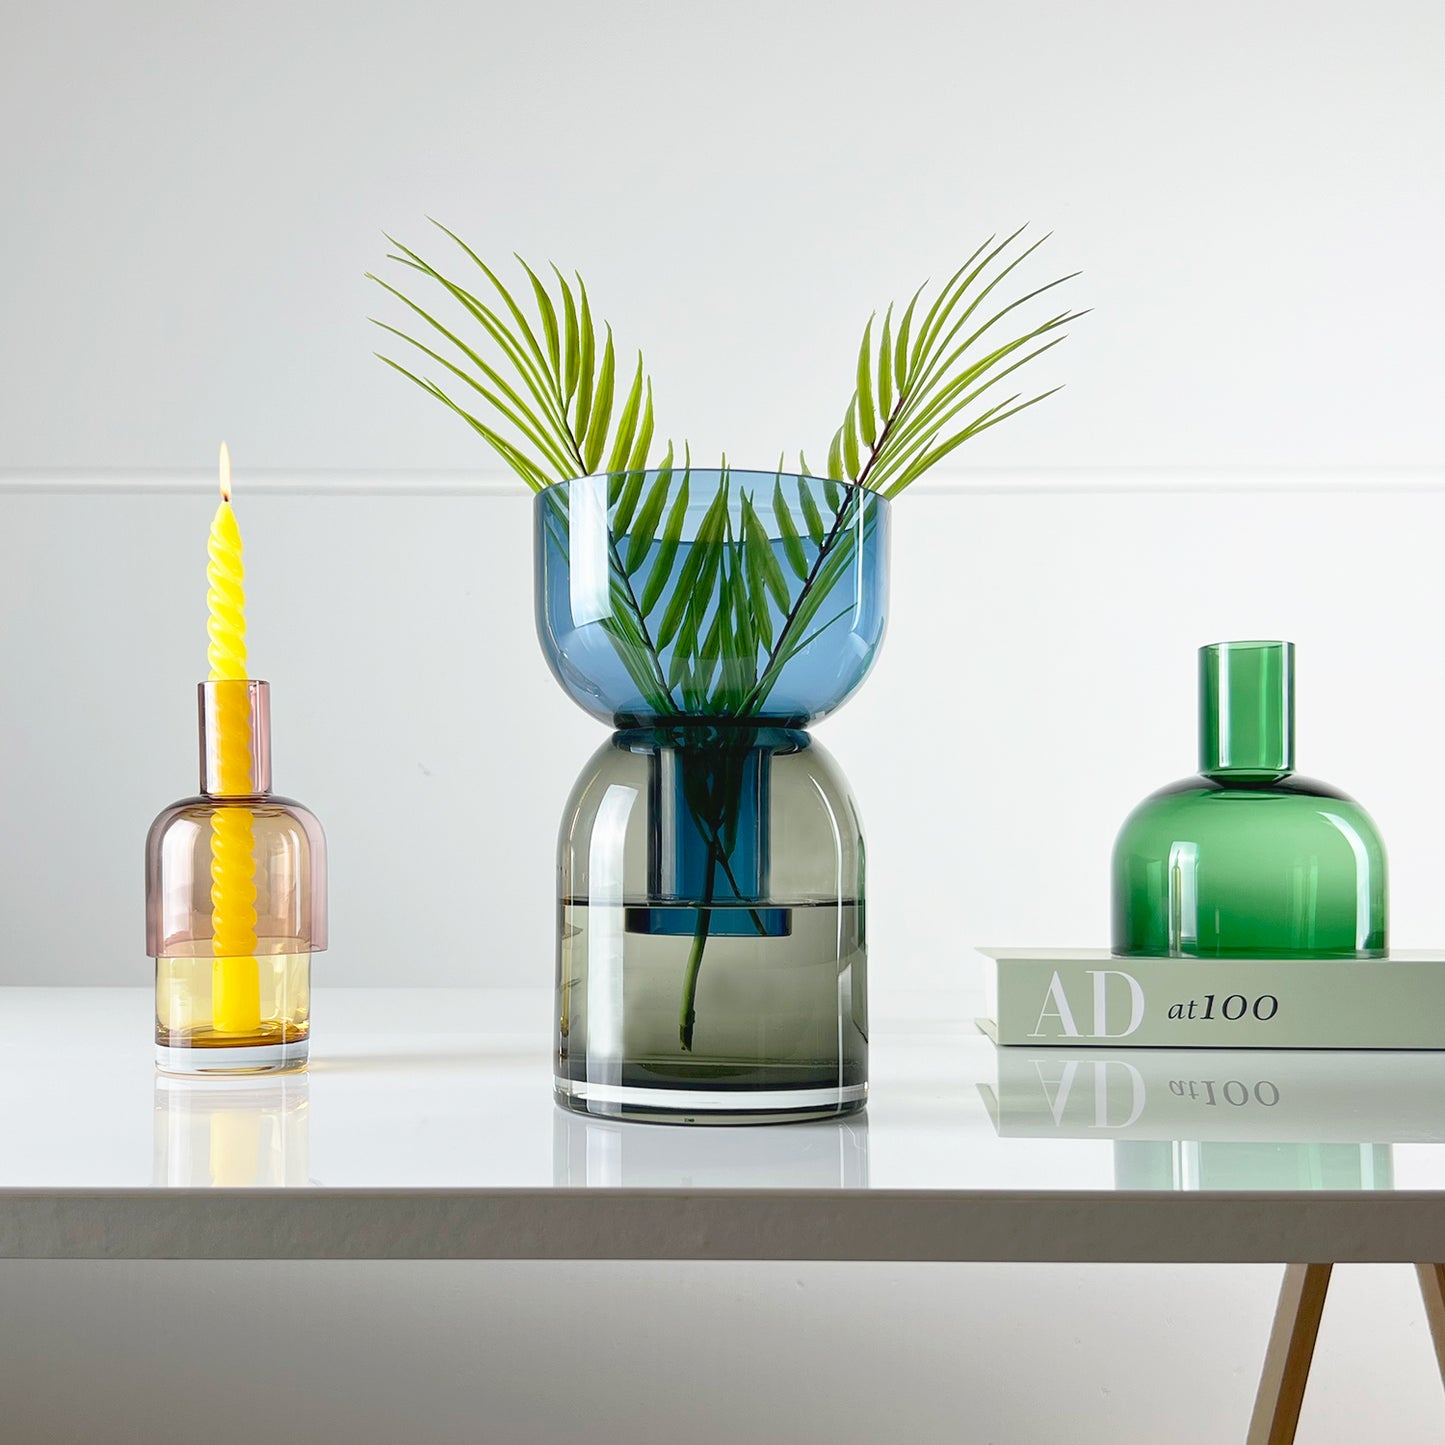 Flip Vase Medium Blue and Gray - Vase - Reversible - Borosilicate Glass - Dual Sided - Floral